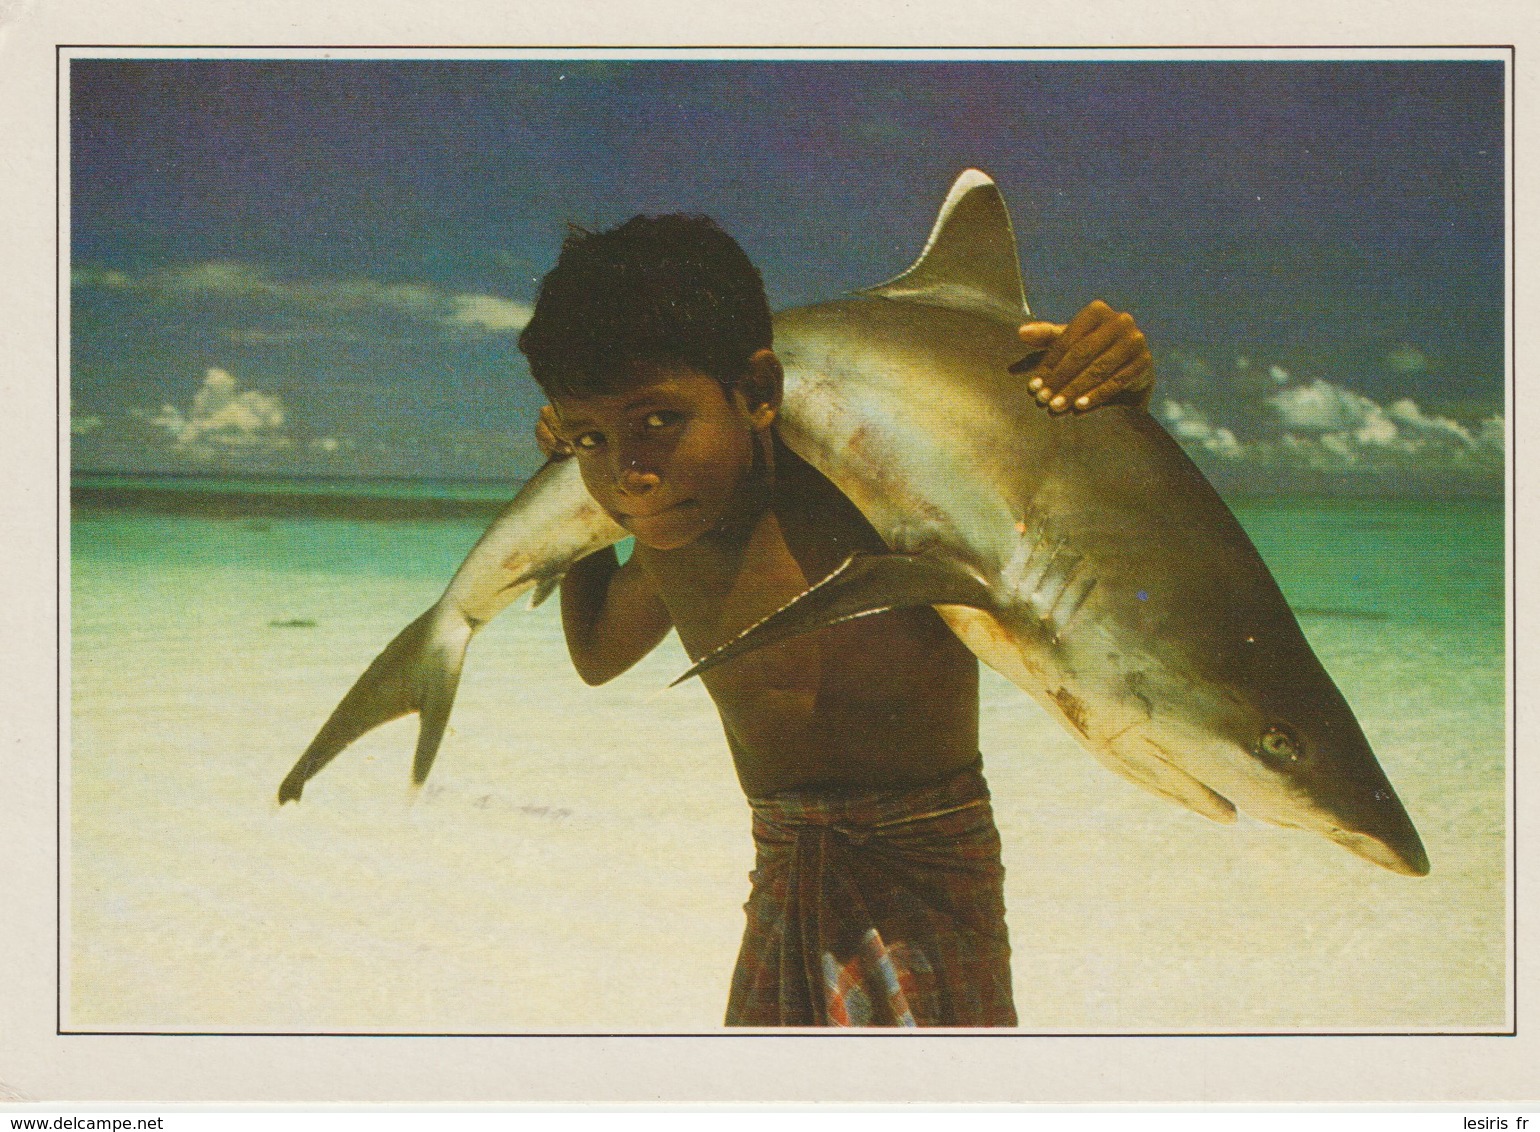 CP - PHOTO - MALEDIVEN XV - THE MALDIVES - WHITE TIPPED SHARK CARRIED BY A YOUNG CHILD - EDITO SERVICE - 1989 - 1990 - Maldivas